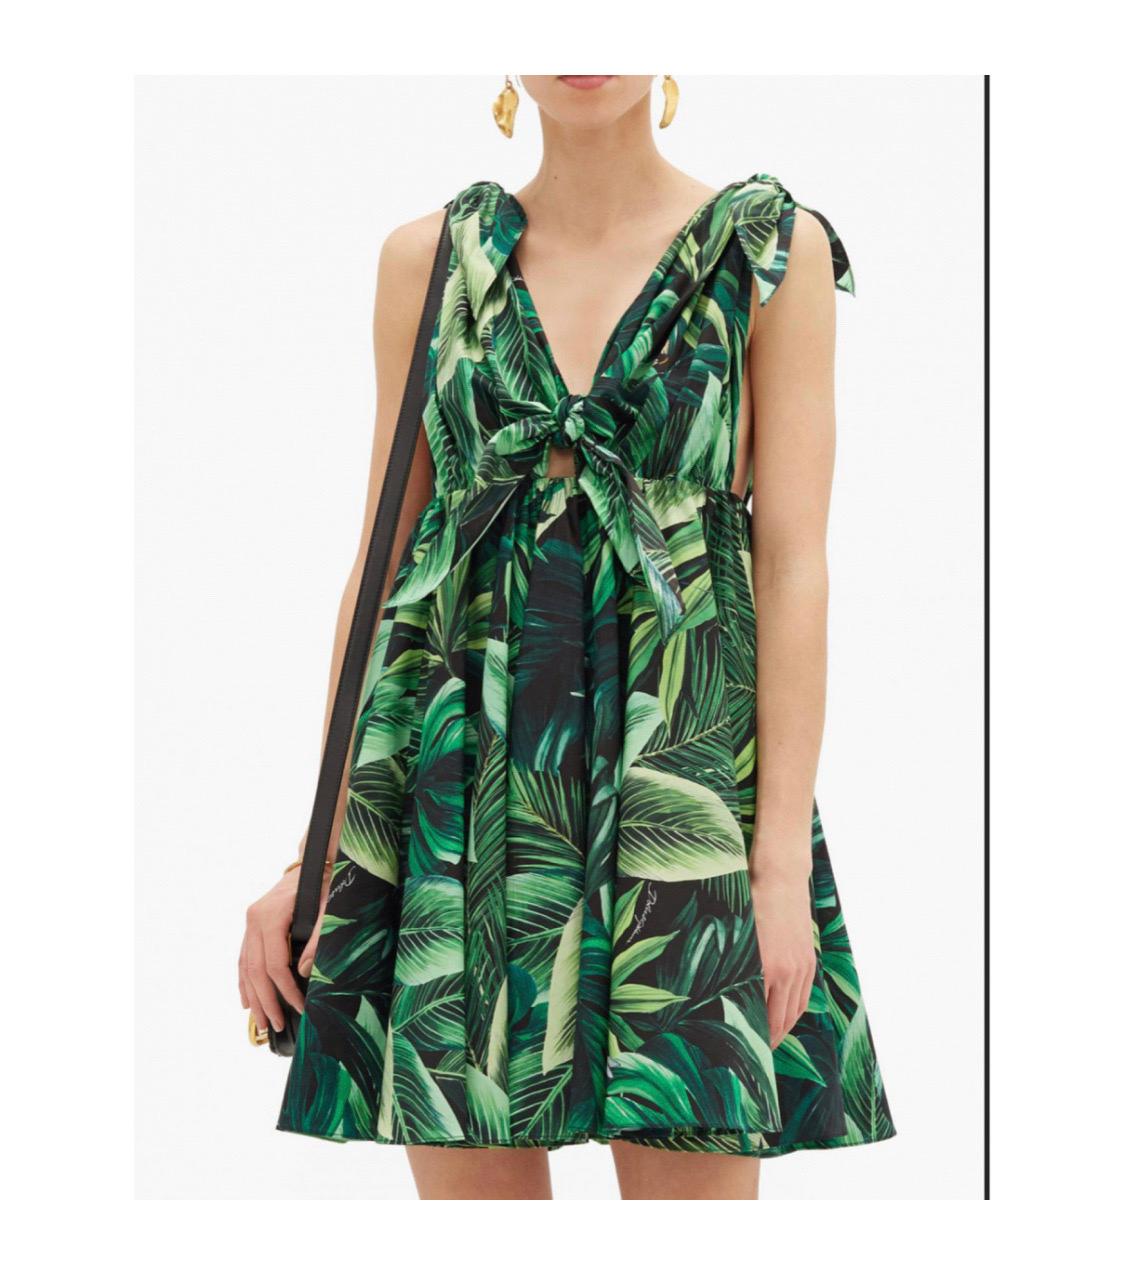 Iconic Dolce & Gabbana’s green Sicilian jungle dress For Sale 1